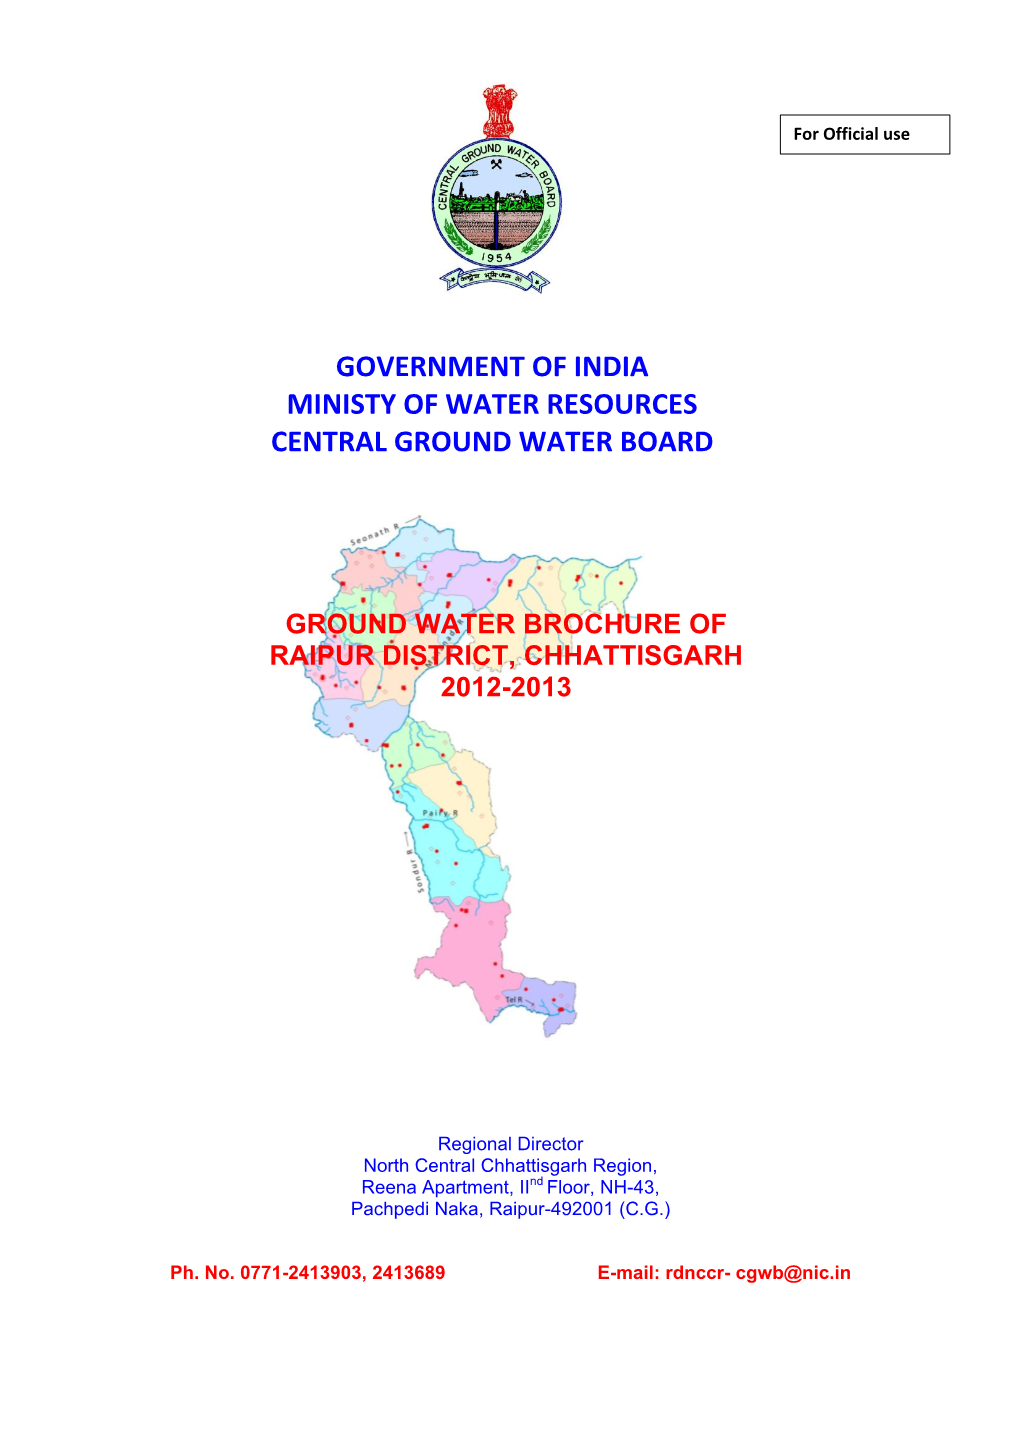 Ground Water Brochure of Raipur District, Chhattisgarh 2012-2013